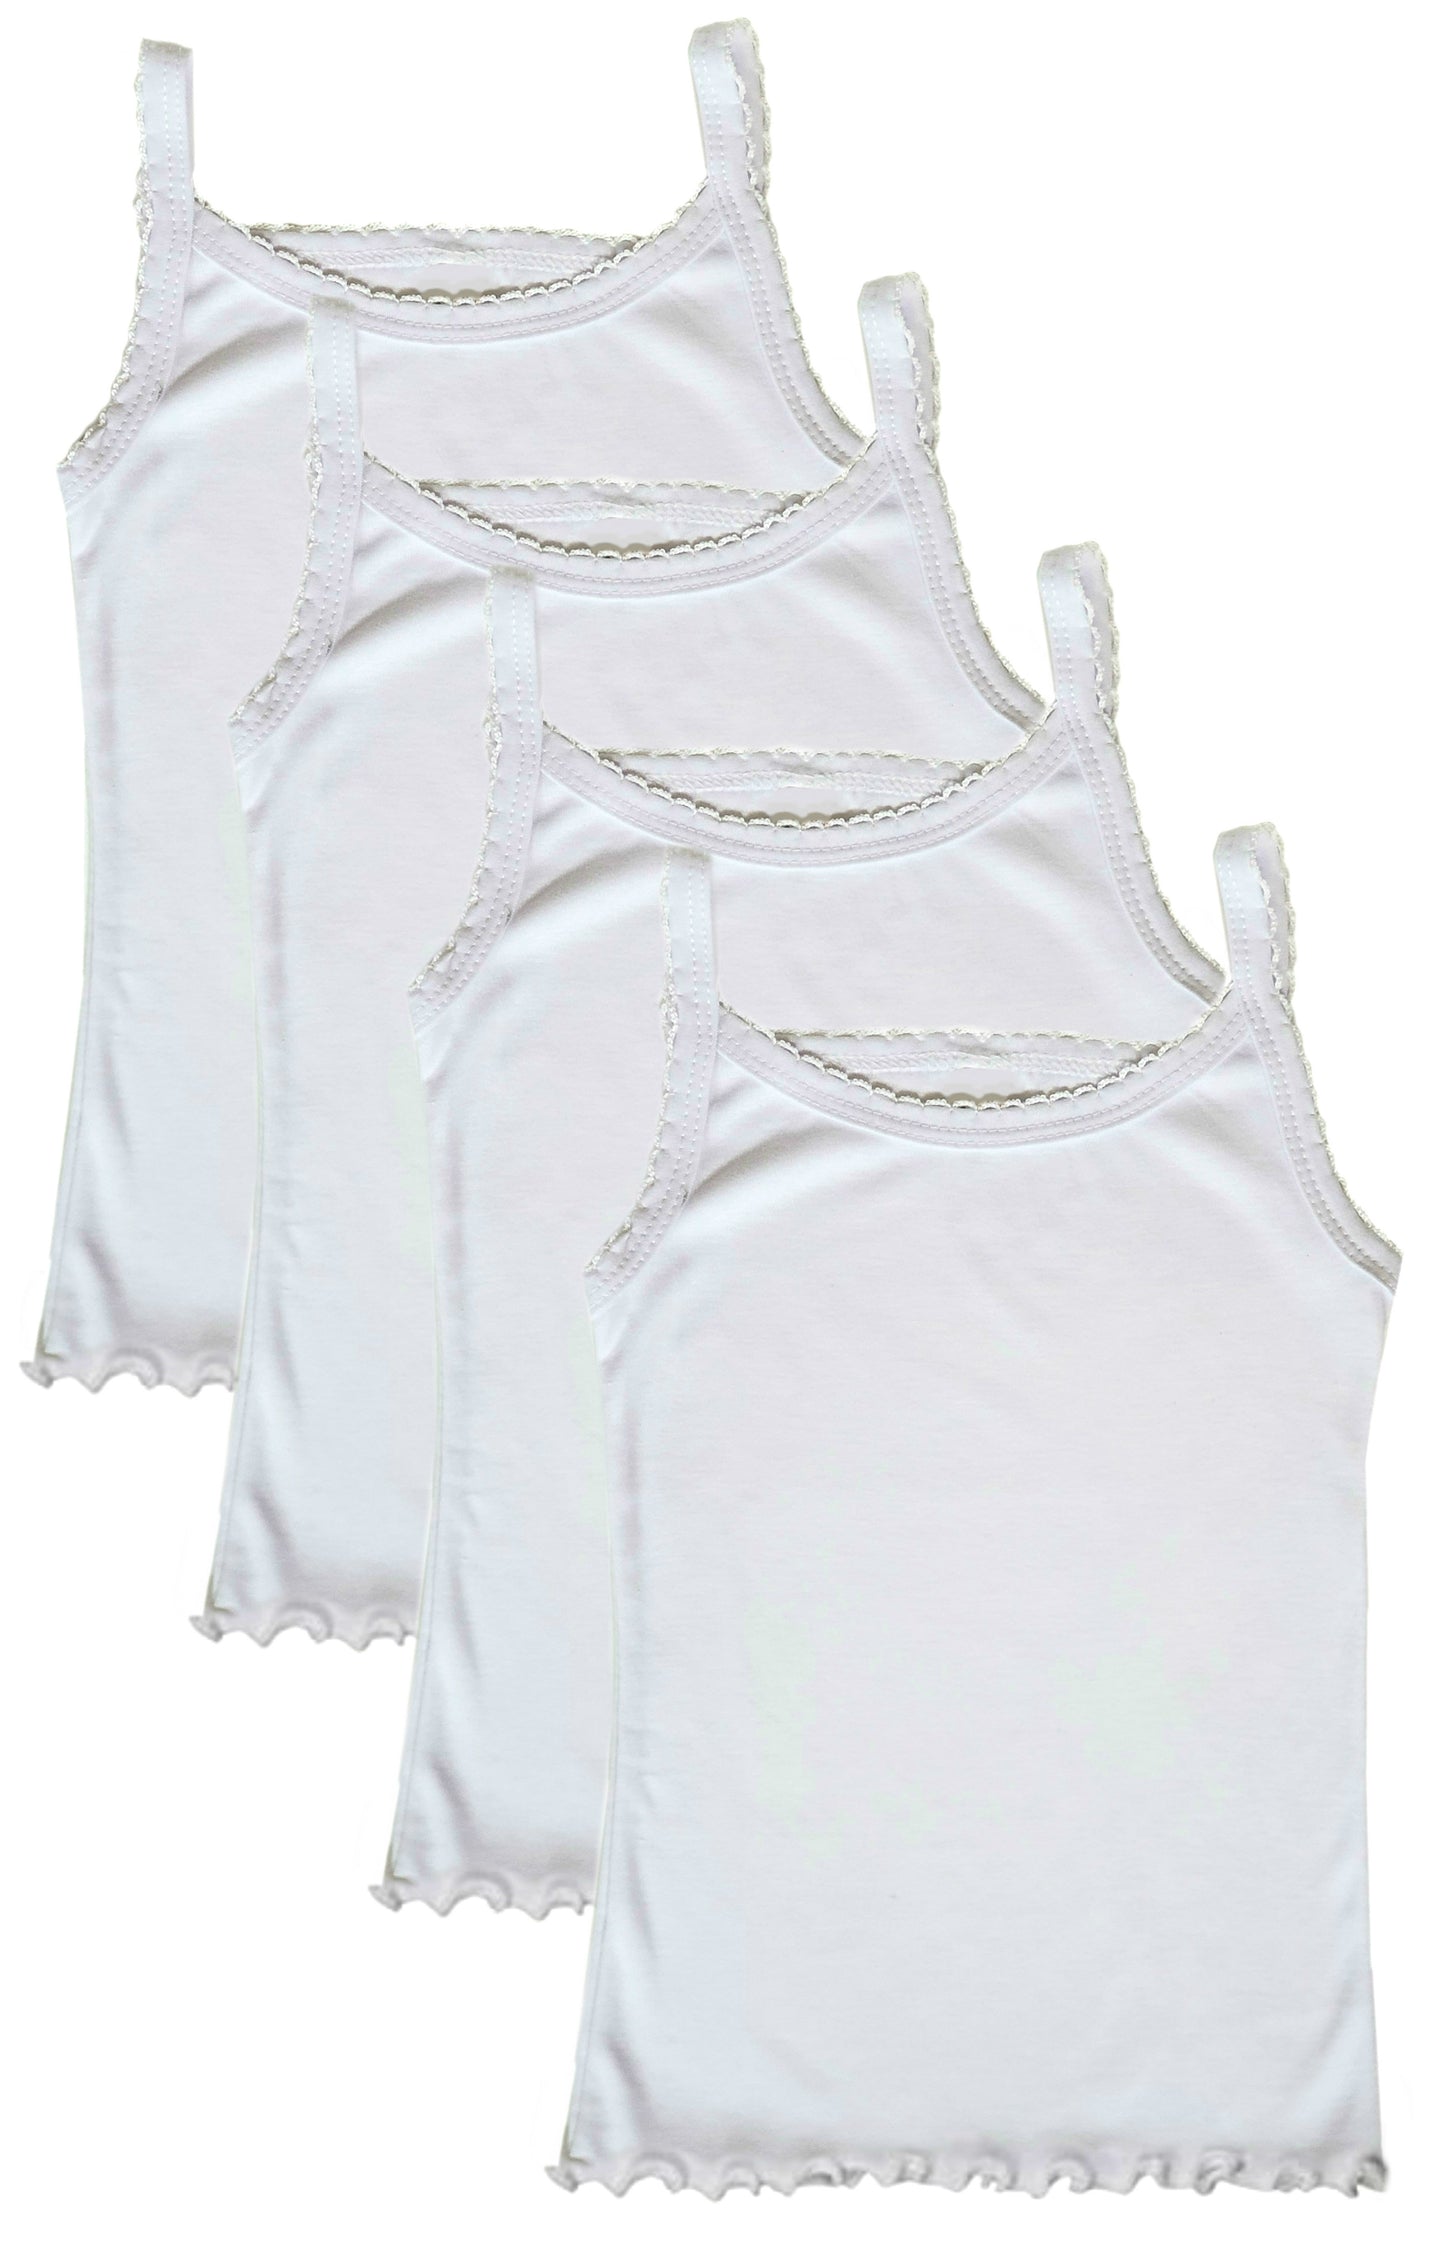 Girls Undershirt Cotton Tank Top Sleeveless 100% Cotton-KC 4401-4404